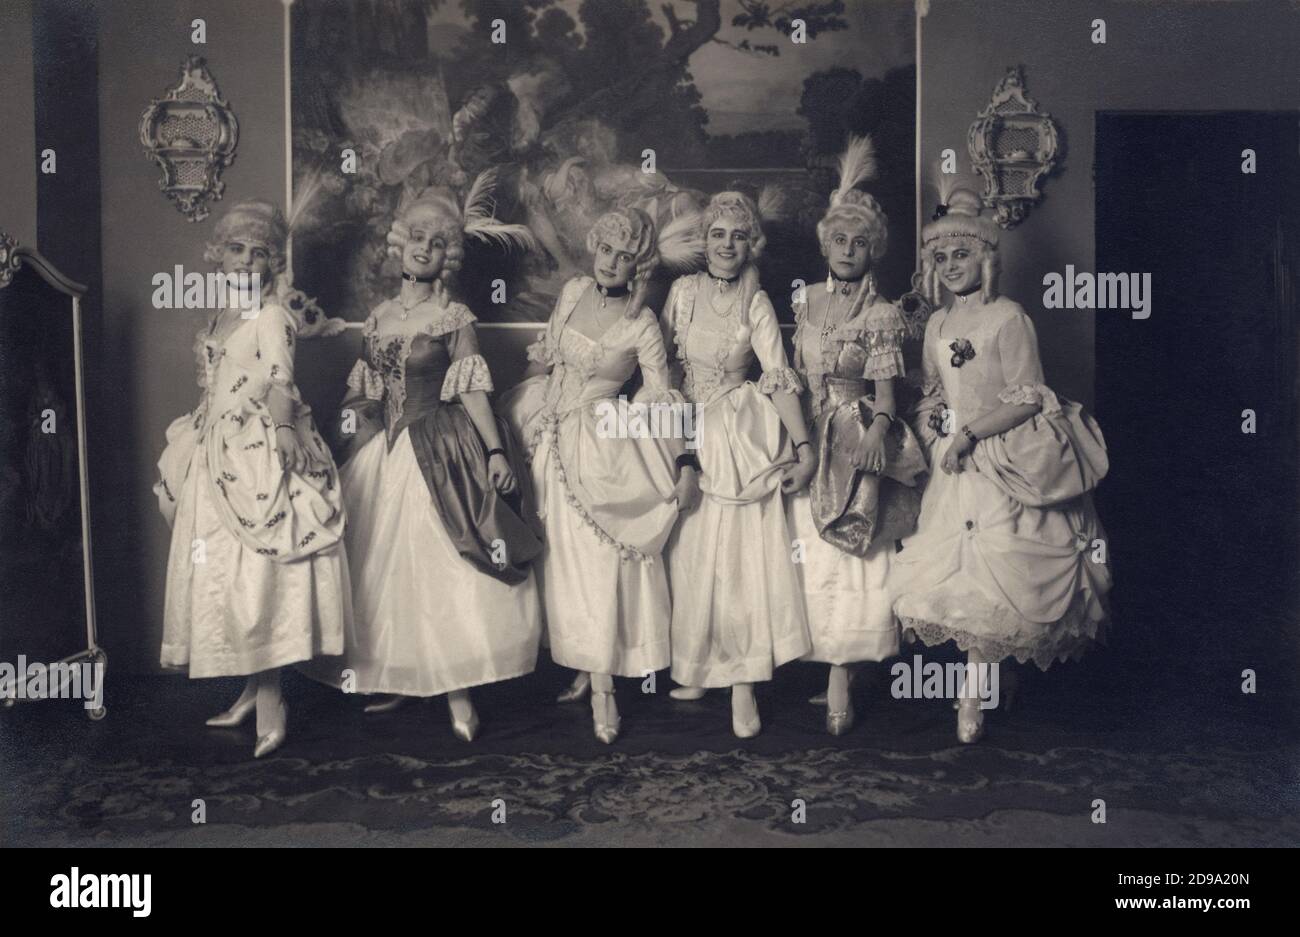 1920 ca , ITALY : Six women in Marie Antoinette XVIII Century fancy dresses  for a costume ball . - Nobilta' italiana - Nobility - fancy dress -  ritratto - portrait 